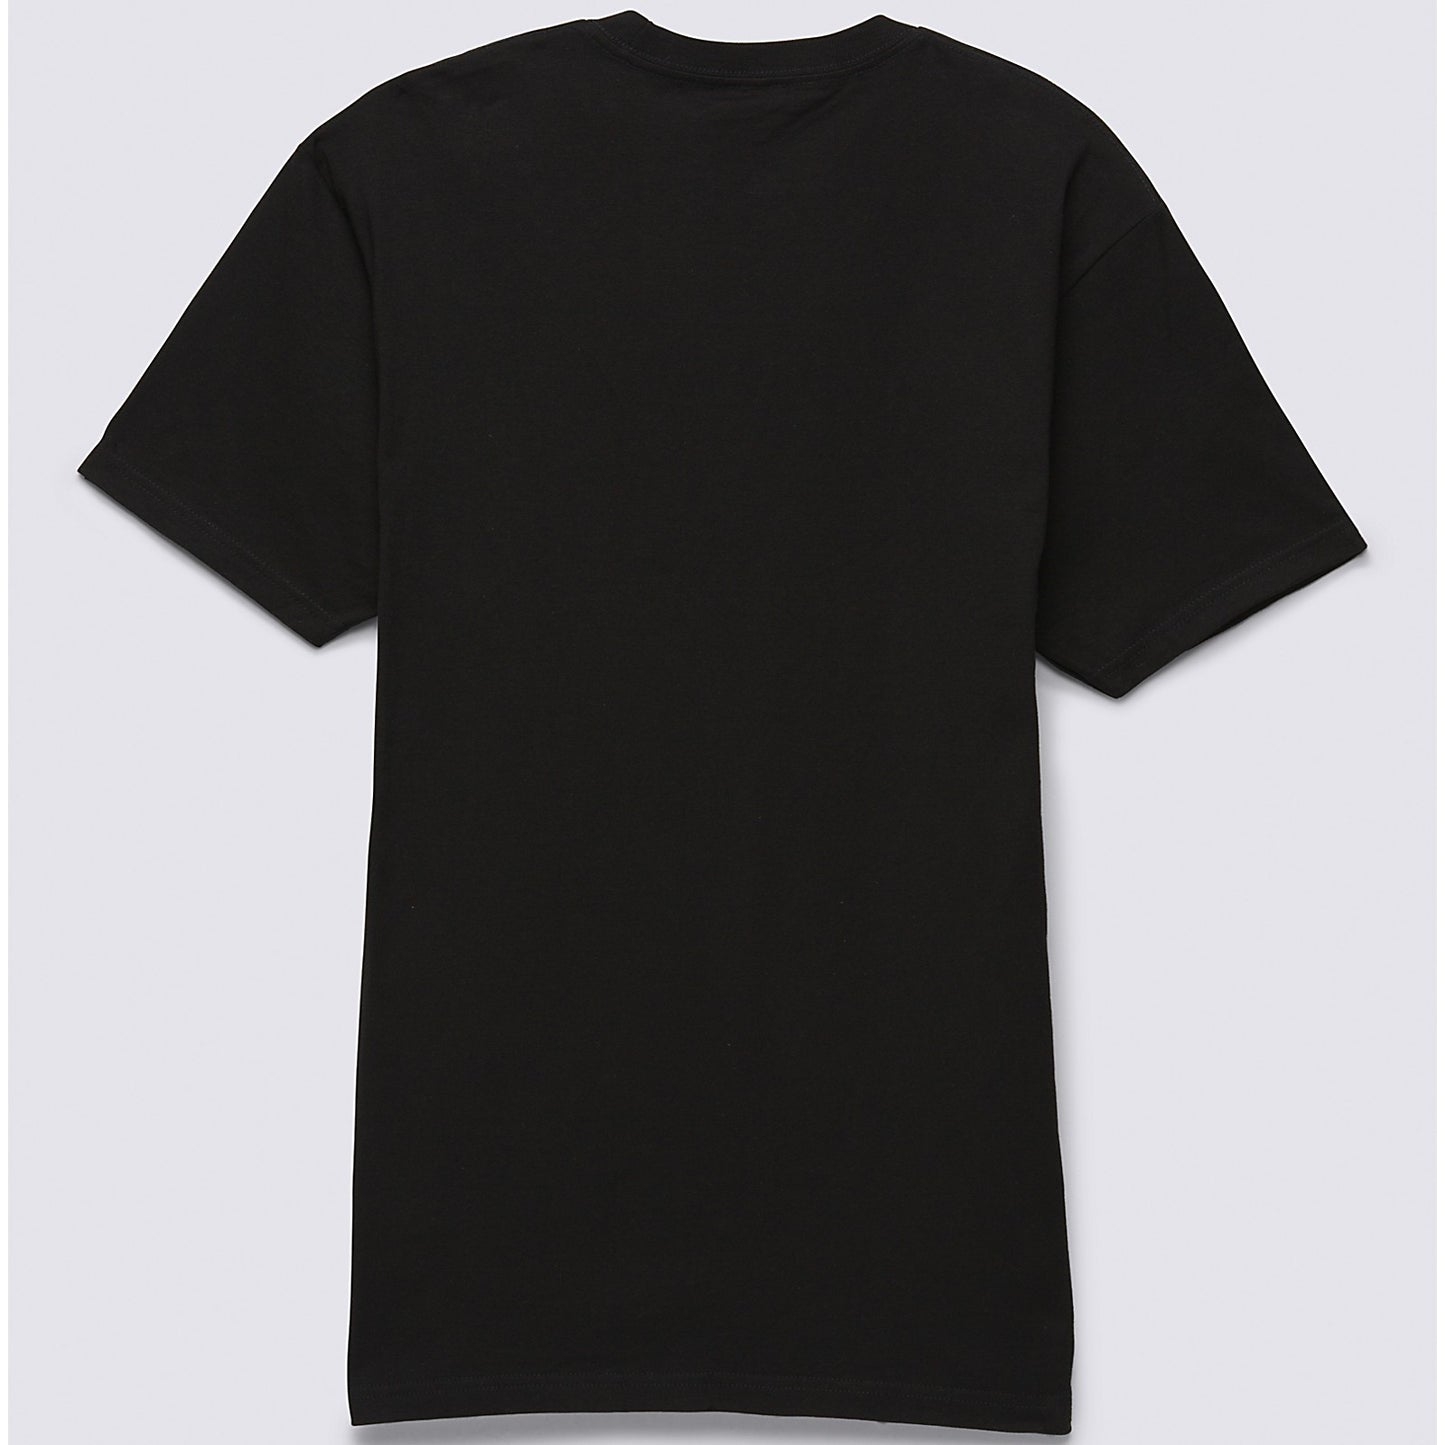 VANS Classic T-Shirt - Black/White